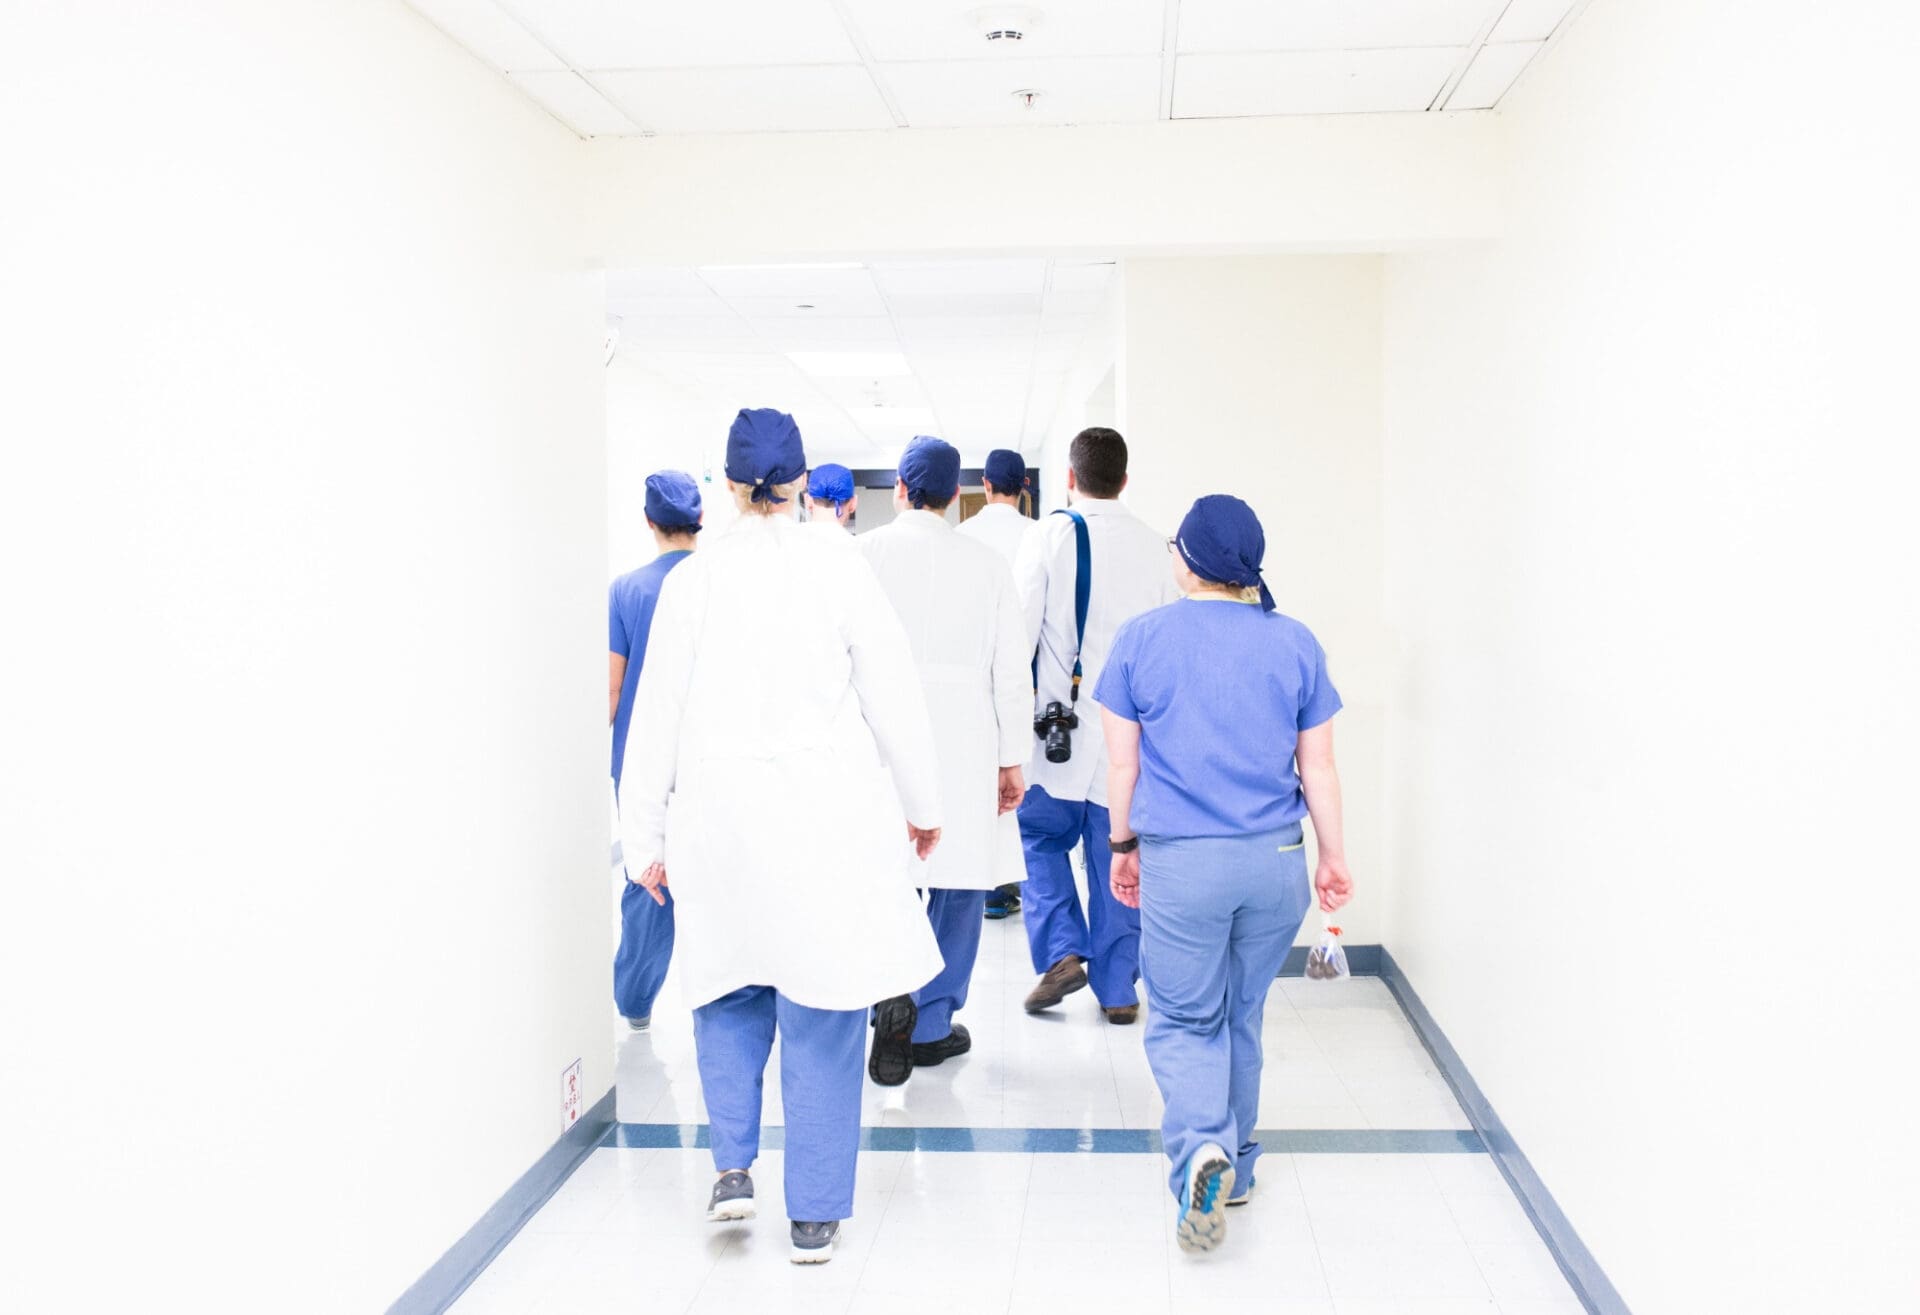 A group of doctors in scrubs walking down a hallway